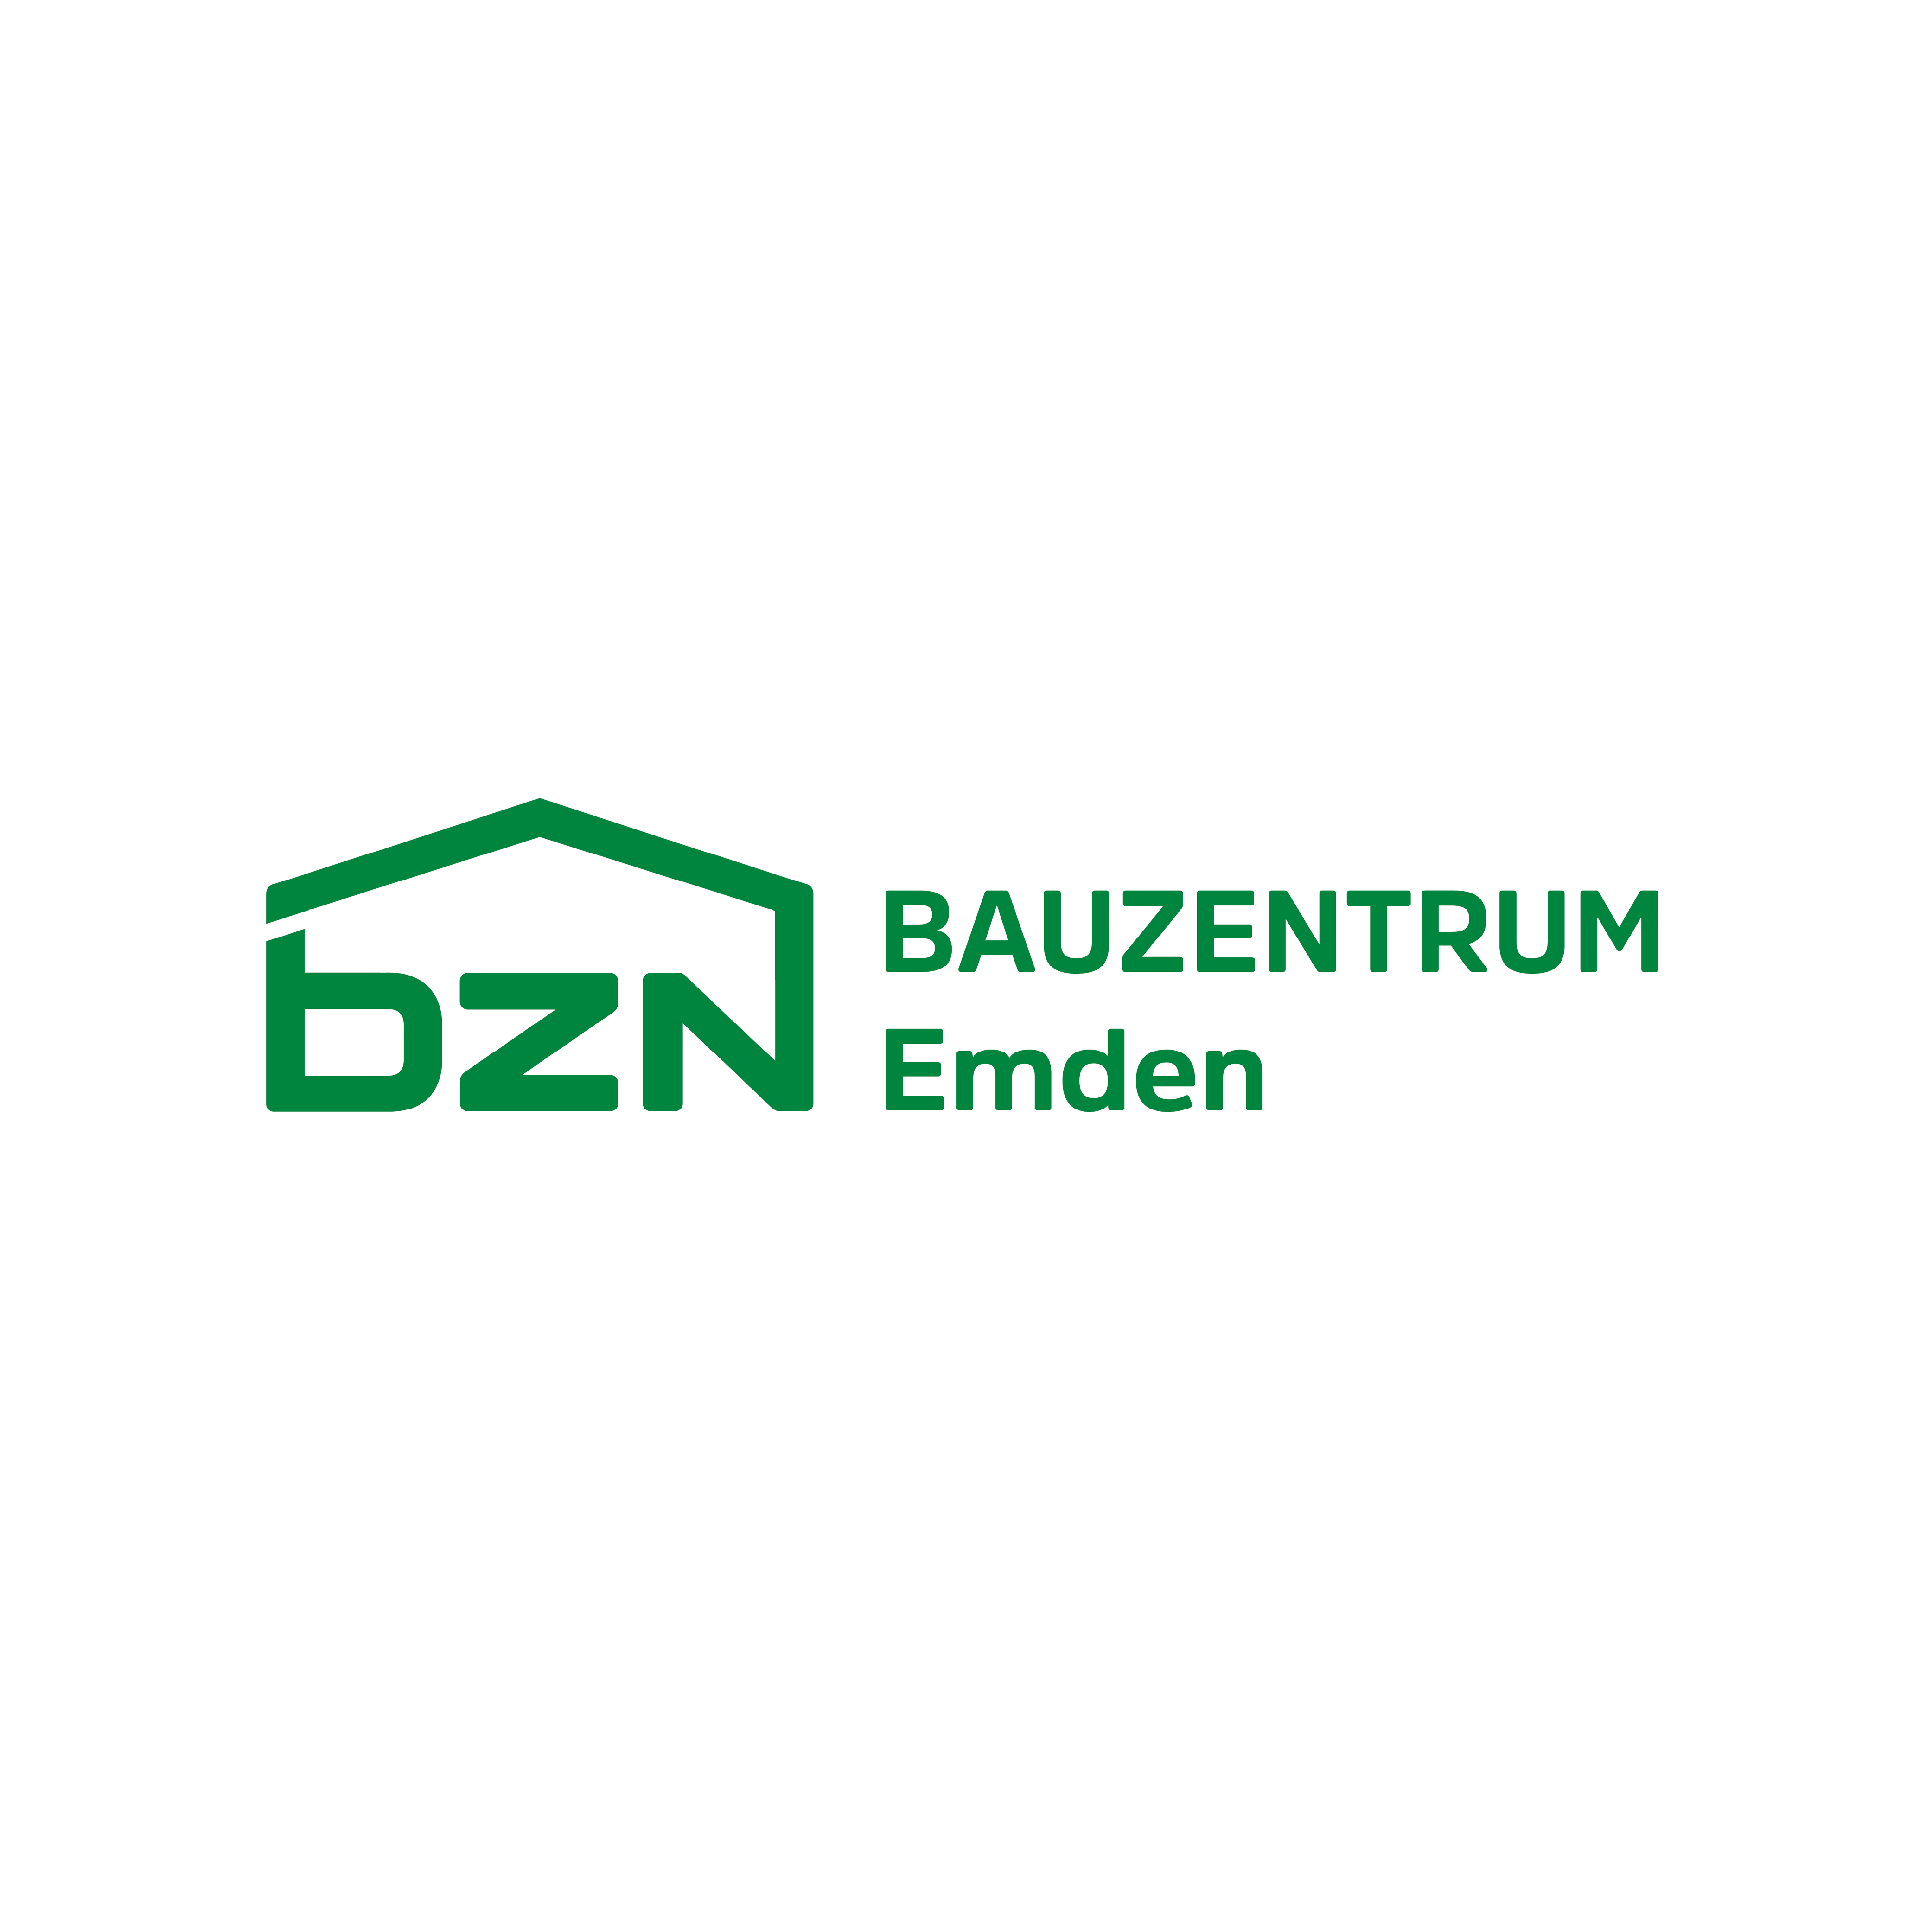 BZN Bauzentrum Emden GmbH & Co. KG in Emden Stadt - Logo